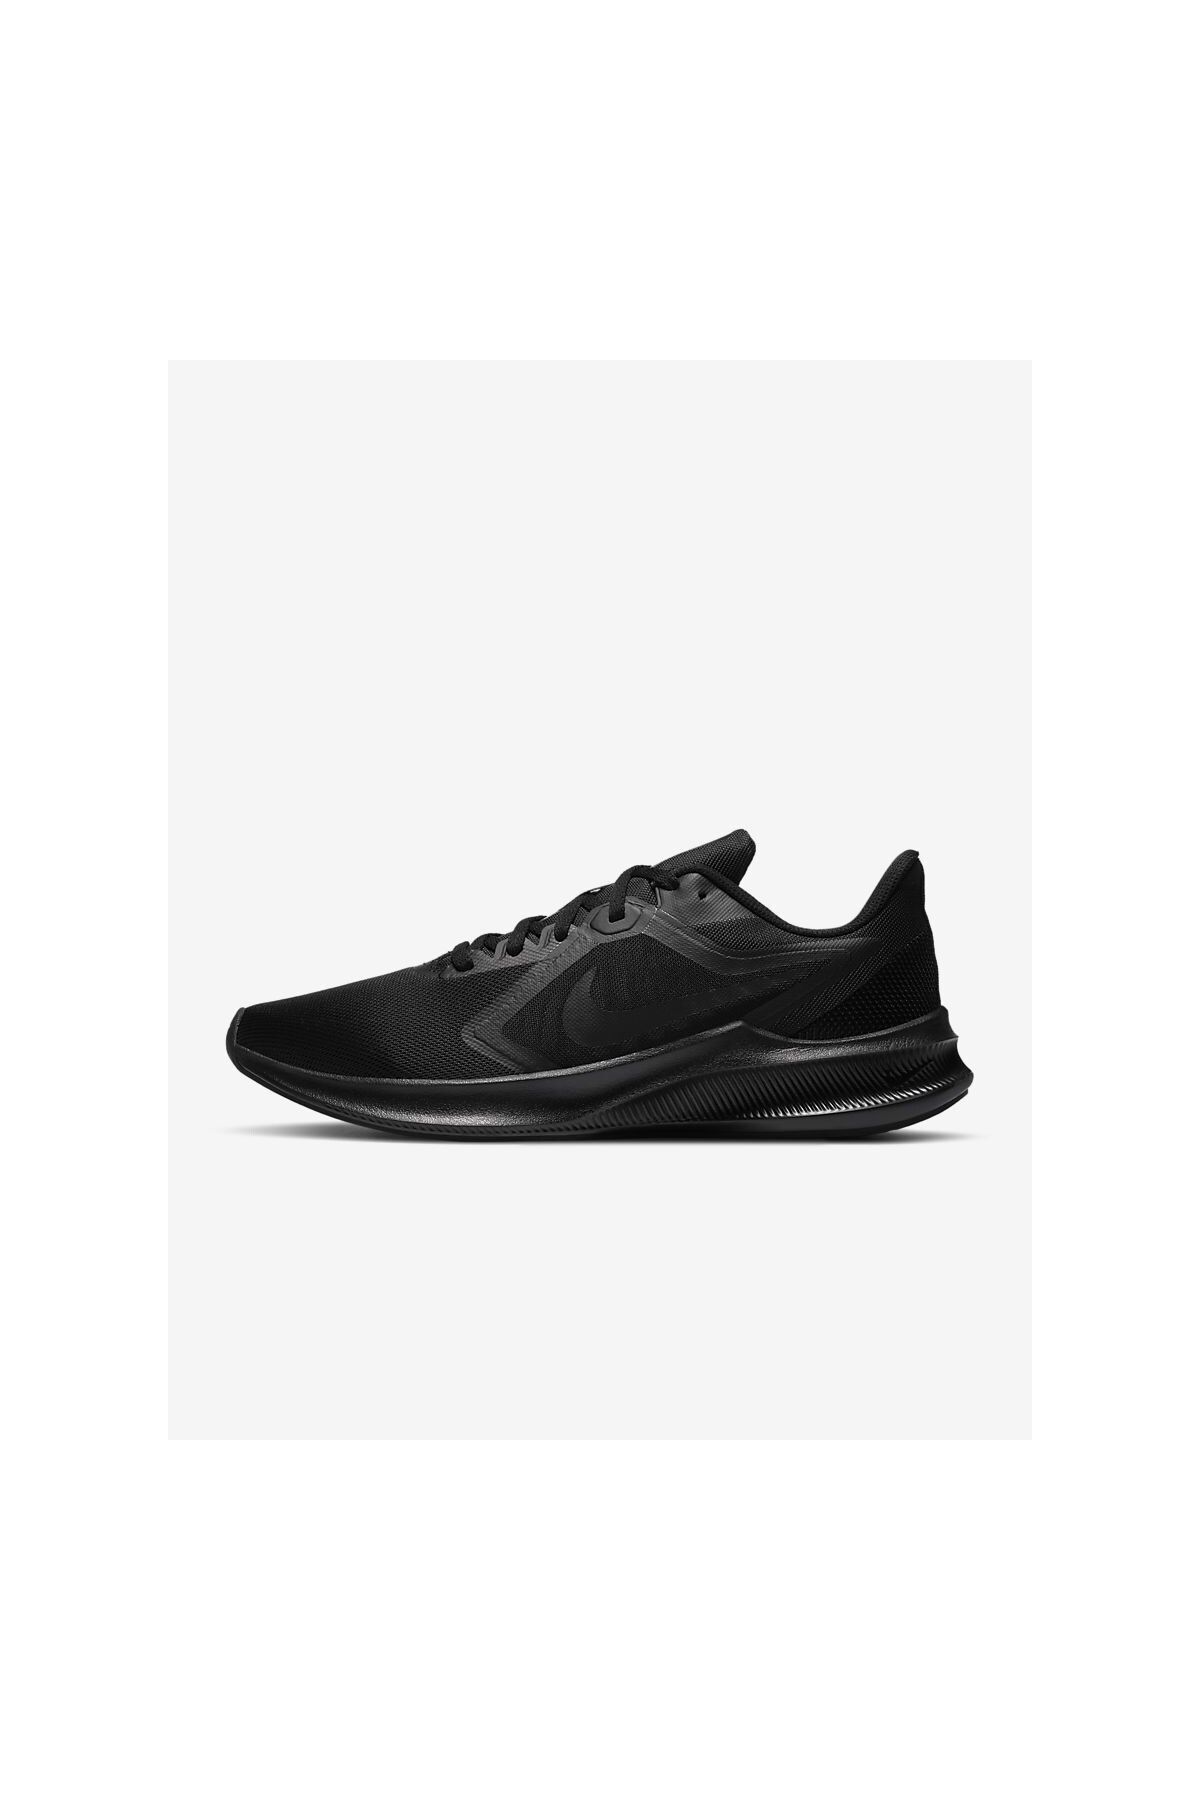 Nike Ci9981 002 Downshifter 10 Erkek Spor Ayakkabı Siyah